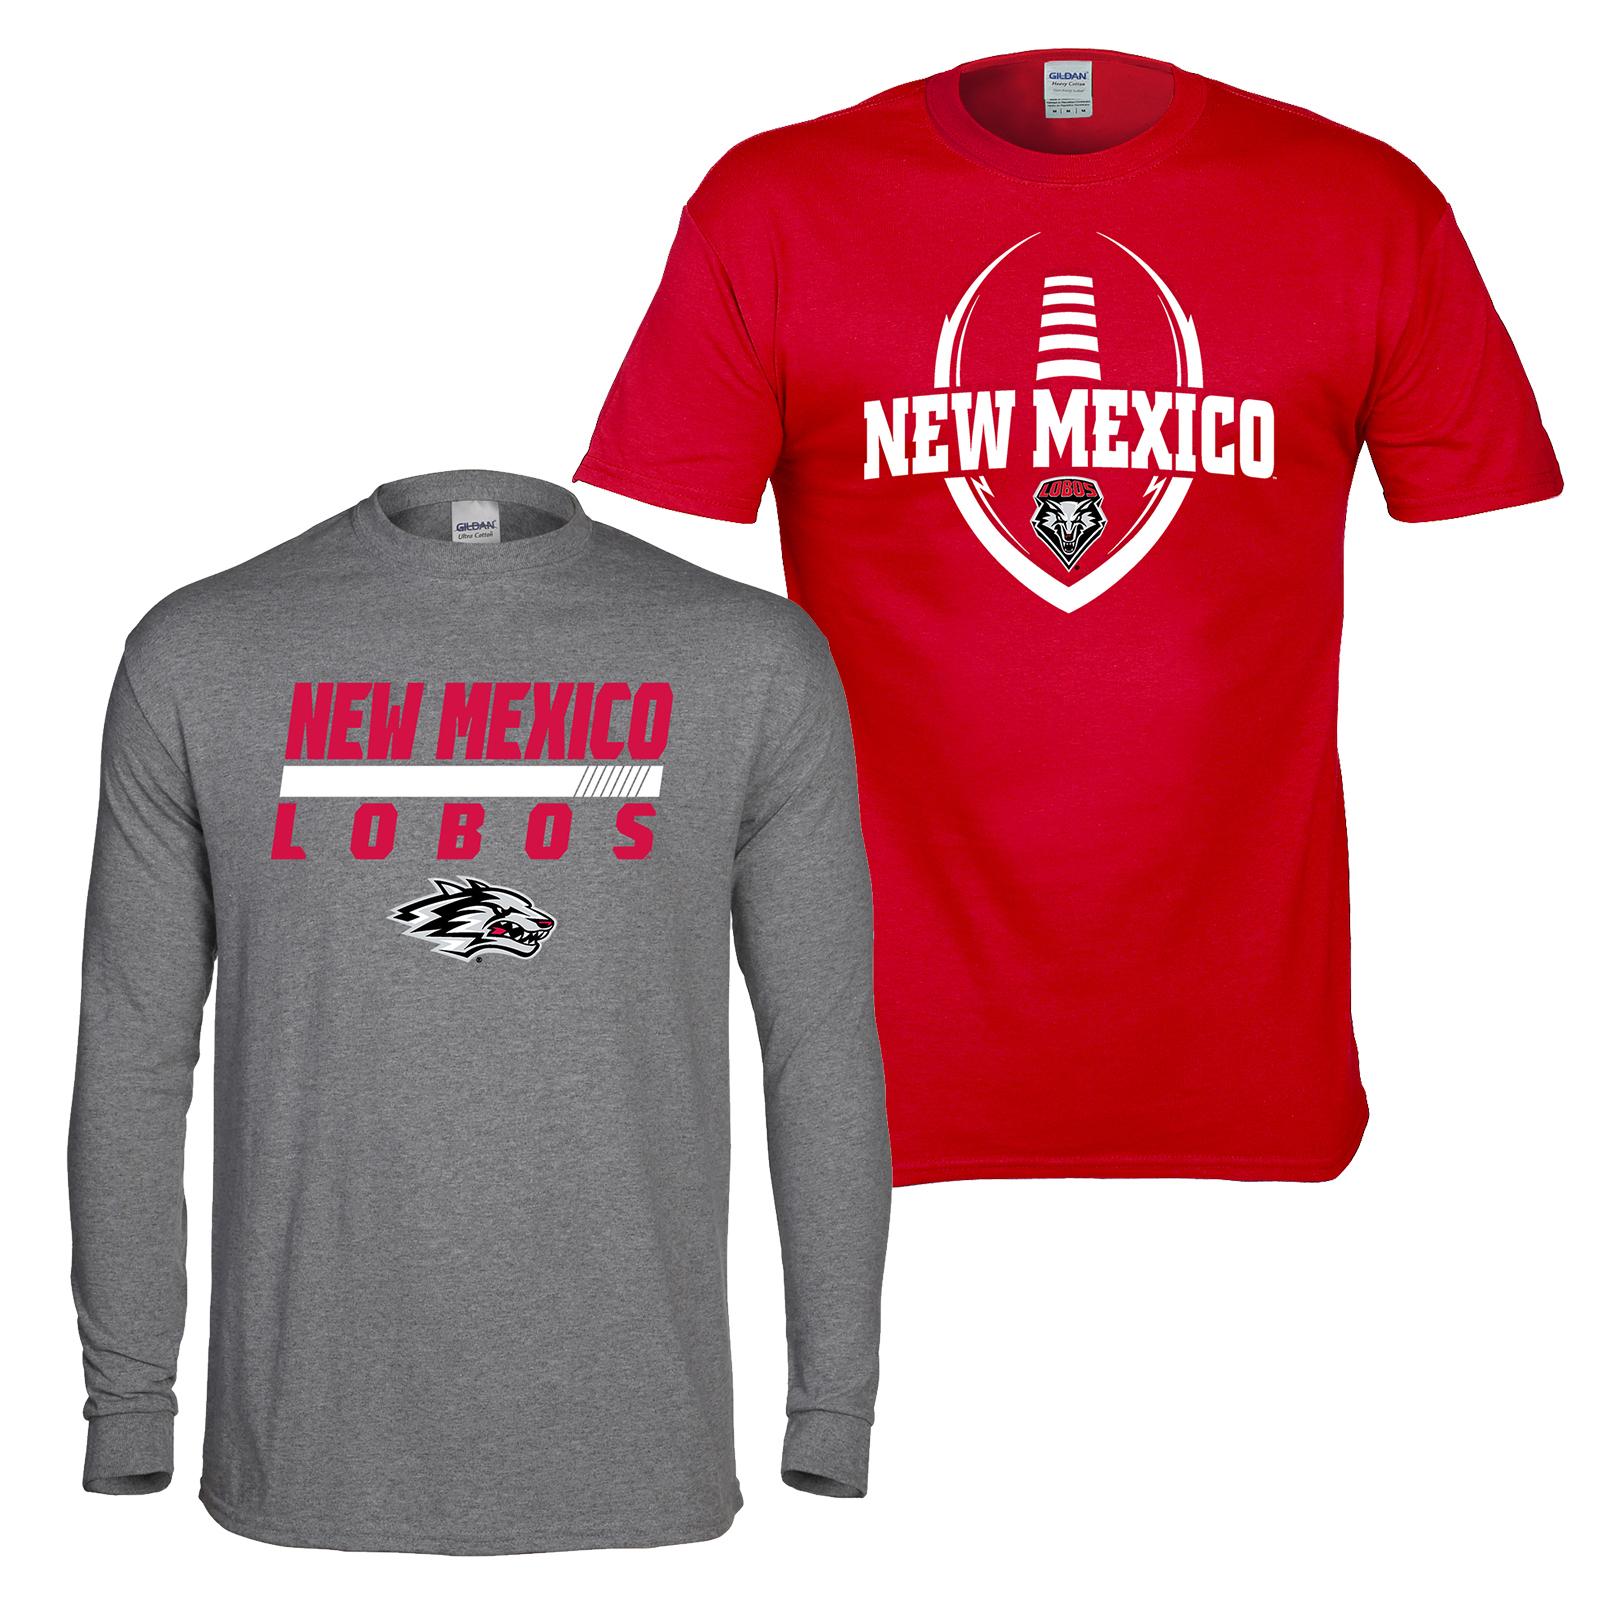 NCAA Boys' 2-Pack Graphic T-Shirts - New Mexico Lobos